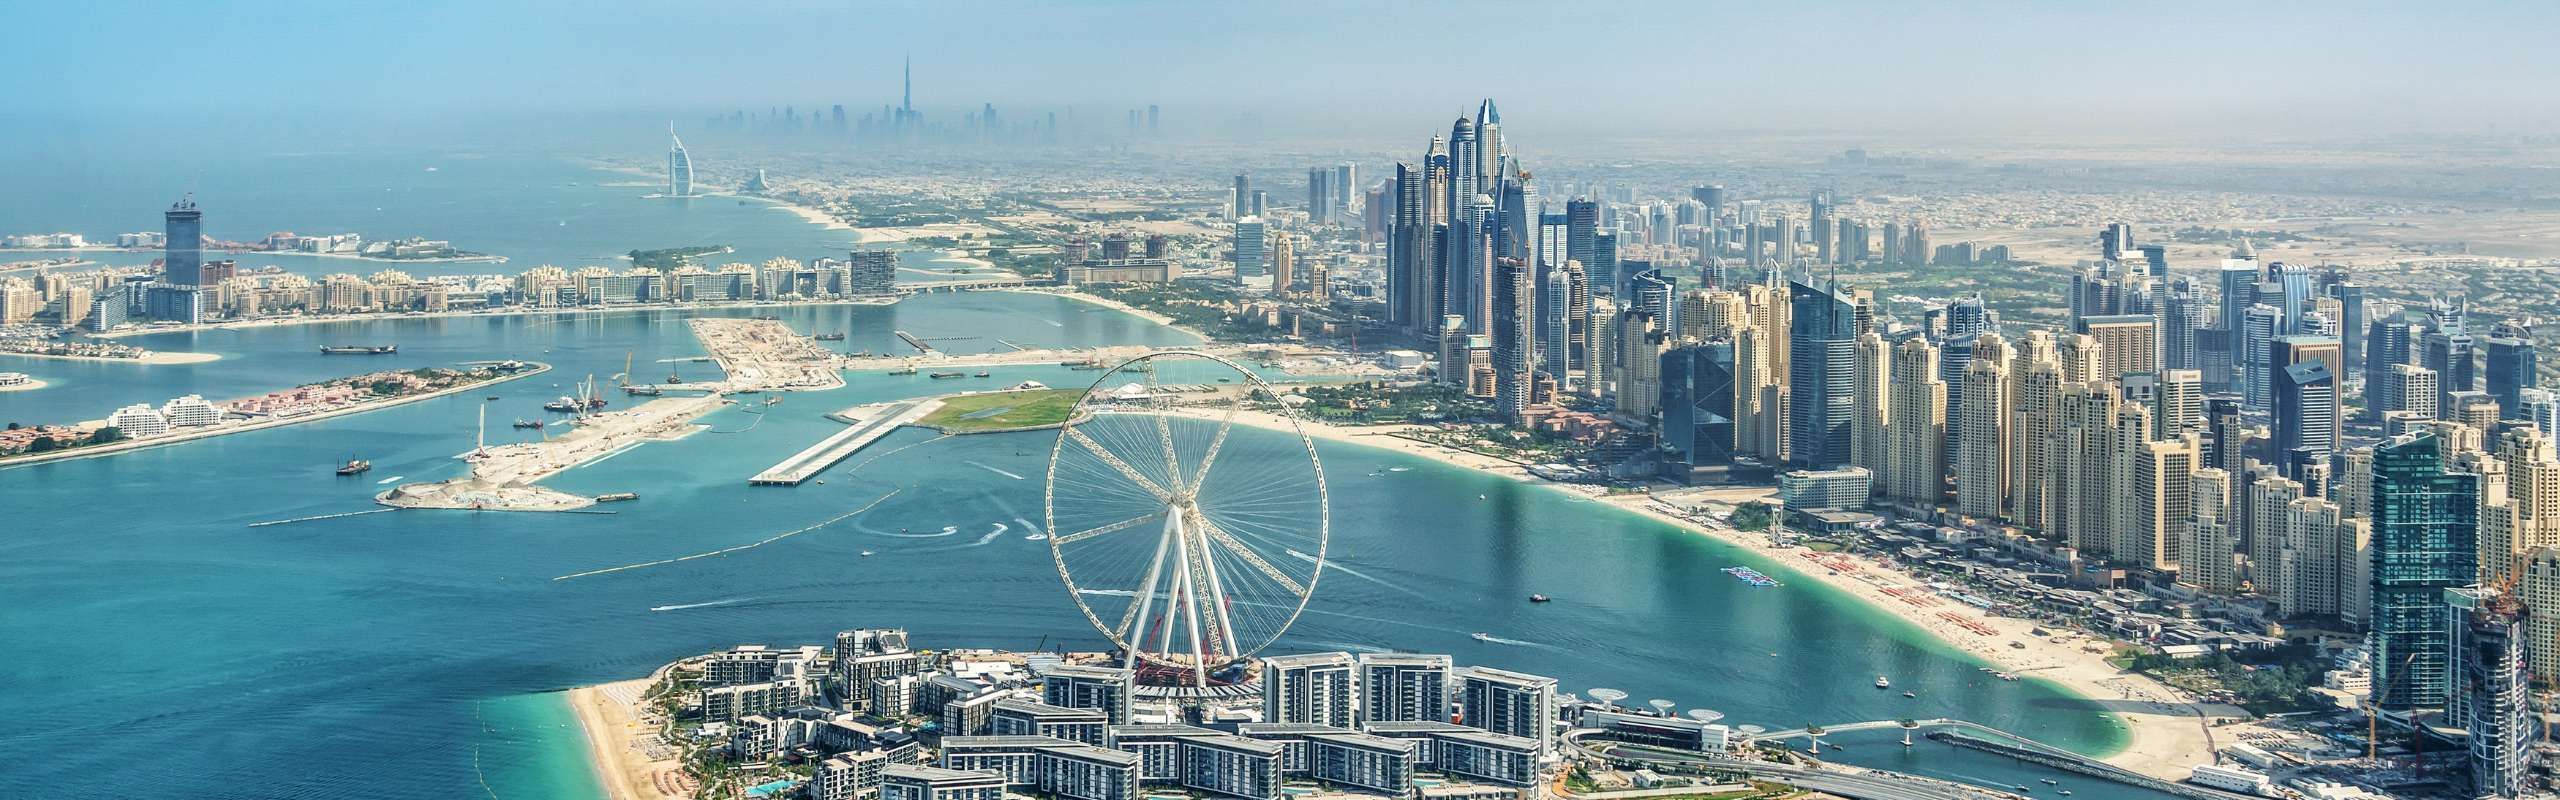 Golden Visas: Long-Term Residency in the UAE